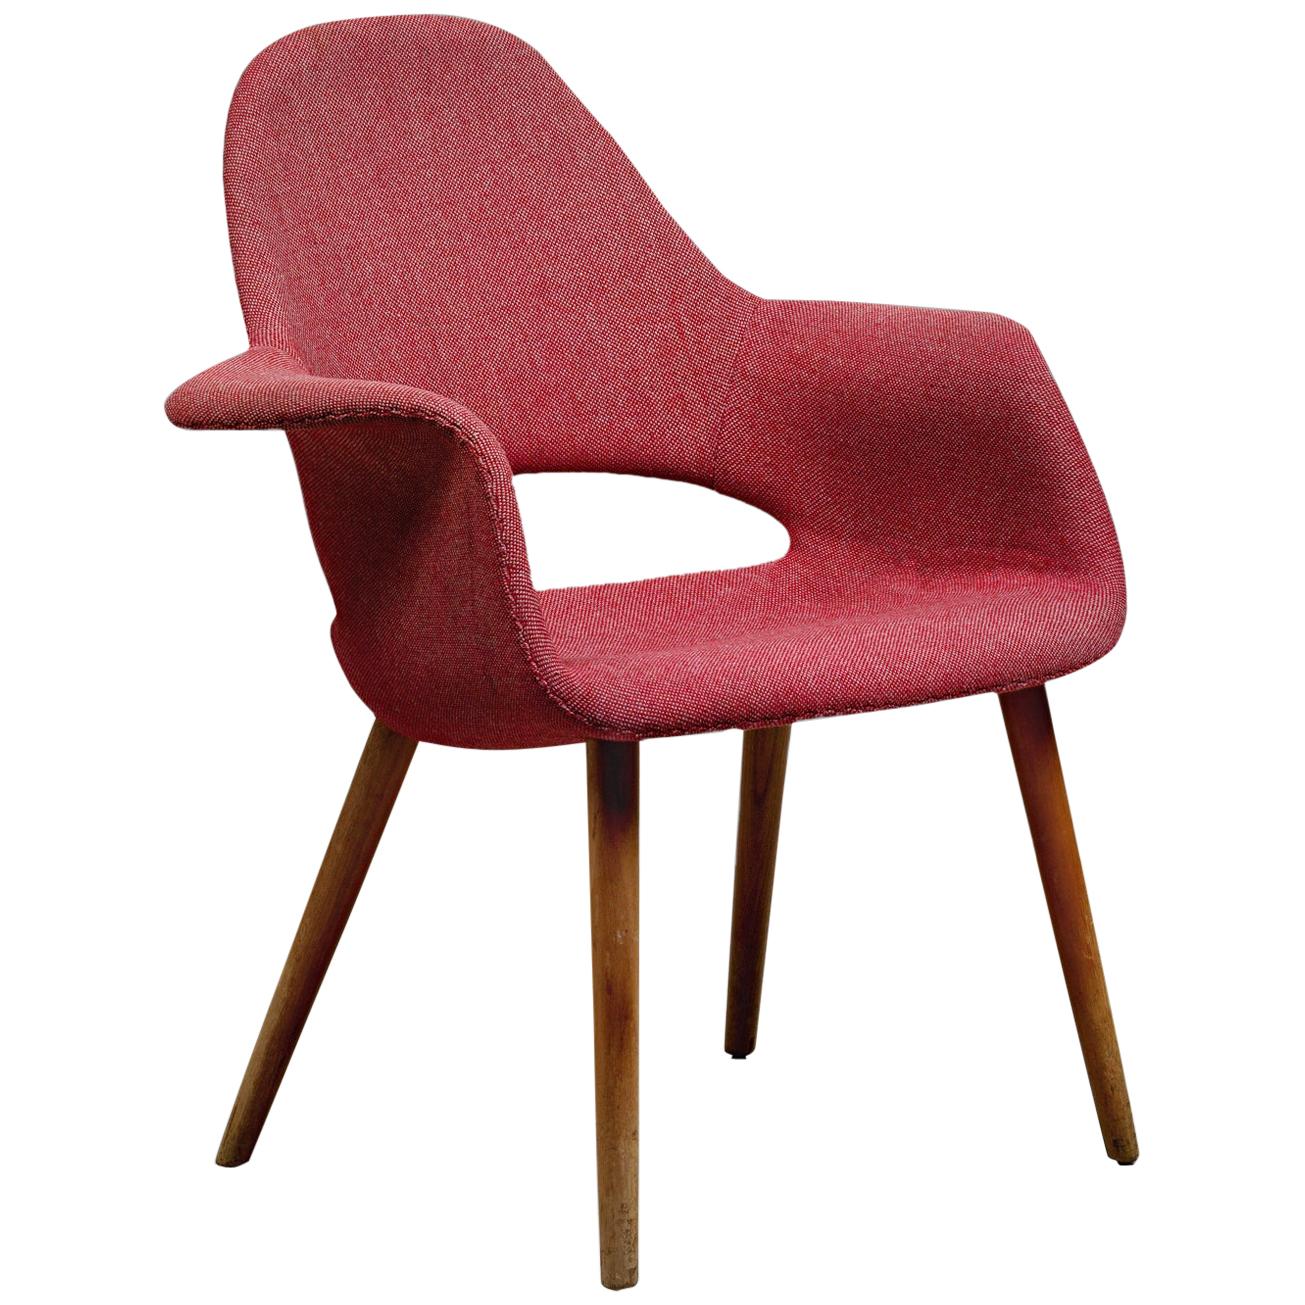 Charles Eames & Eero Saarinen “Organic Chair” Model No. A3501, 1950, USA For Sale